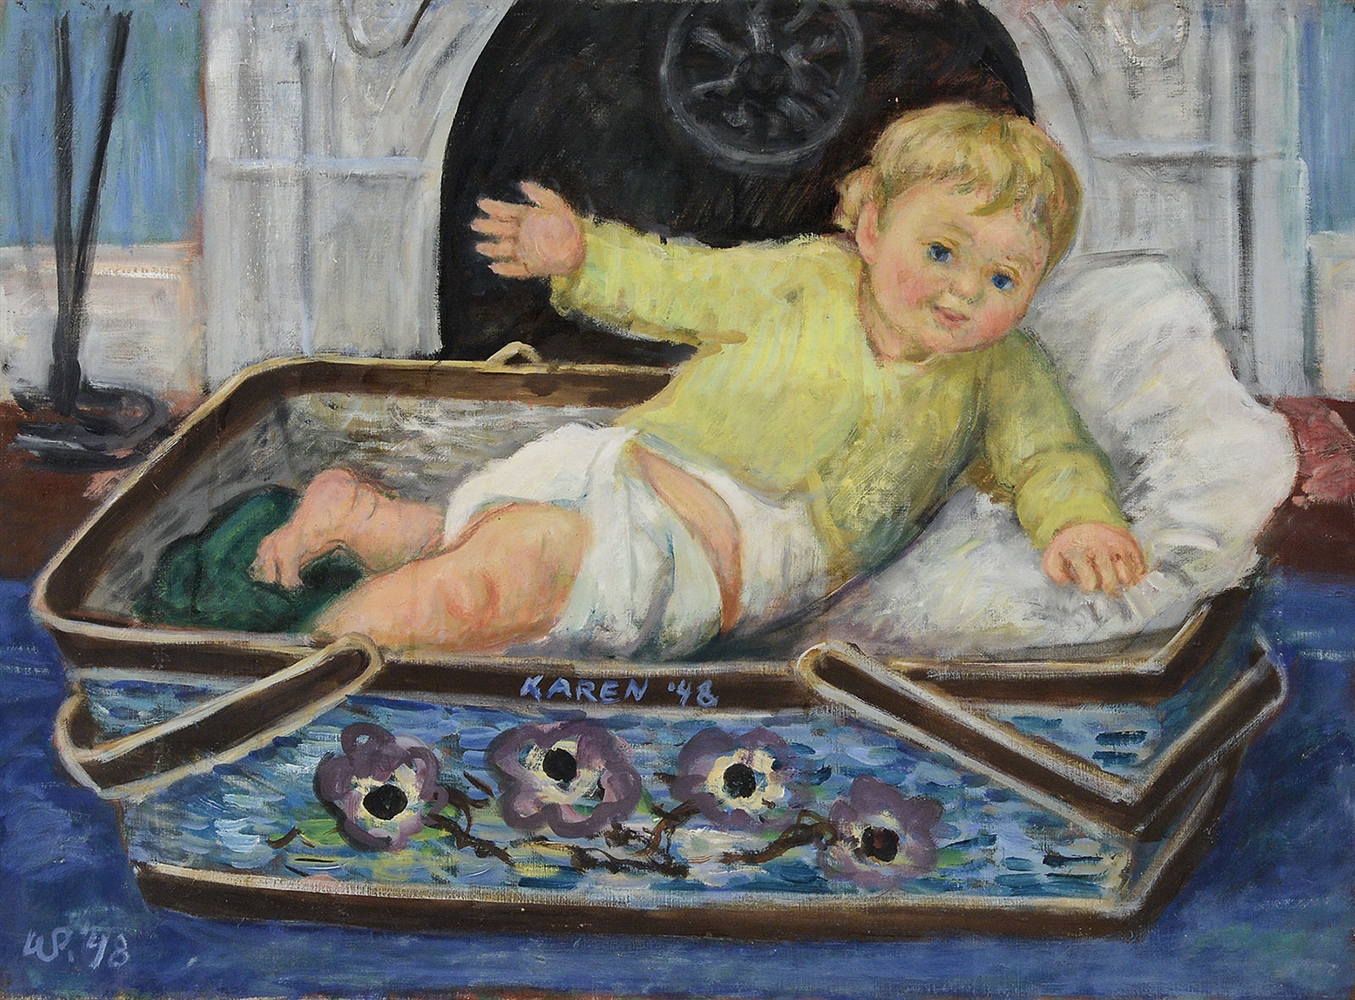 WALDO PEIRCE (AMERICAN, 1884-1970) "THE BABY"                                                                                                                                                           